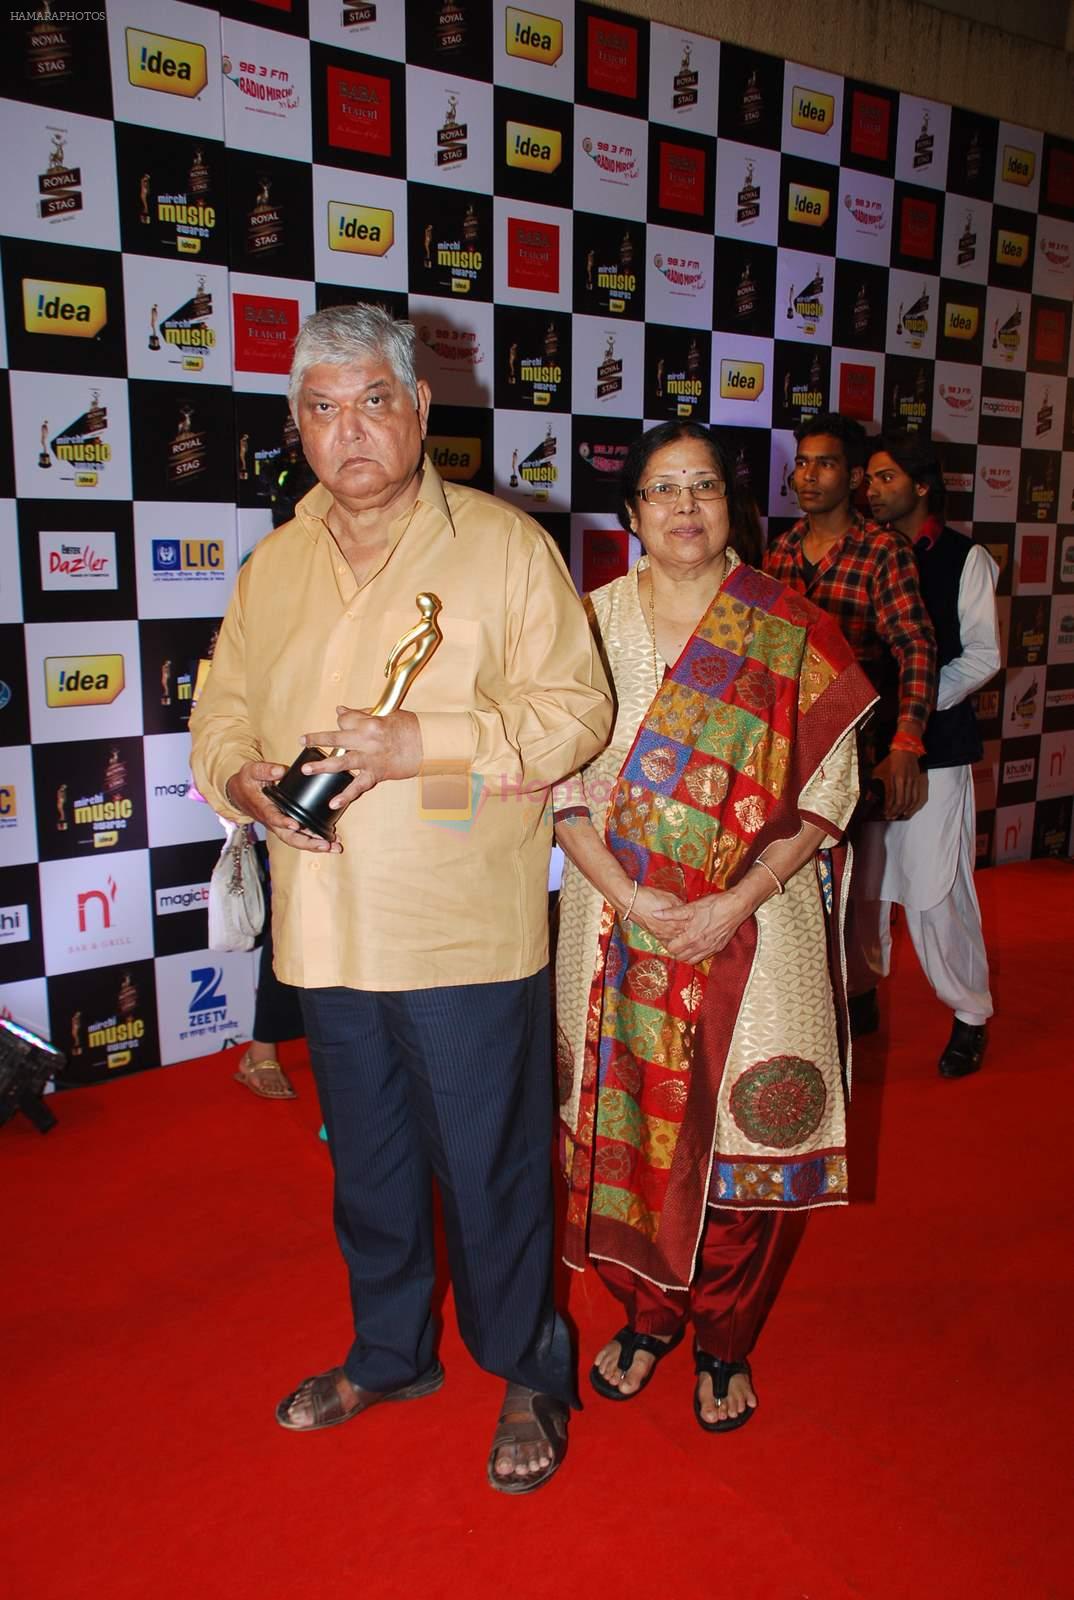 at 7th Mirchi Music Awards in Mumbai on 26th Feb 2015